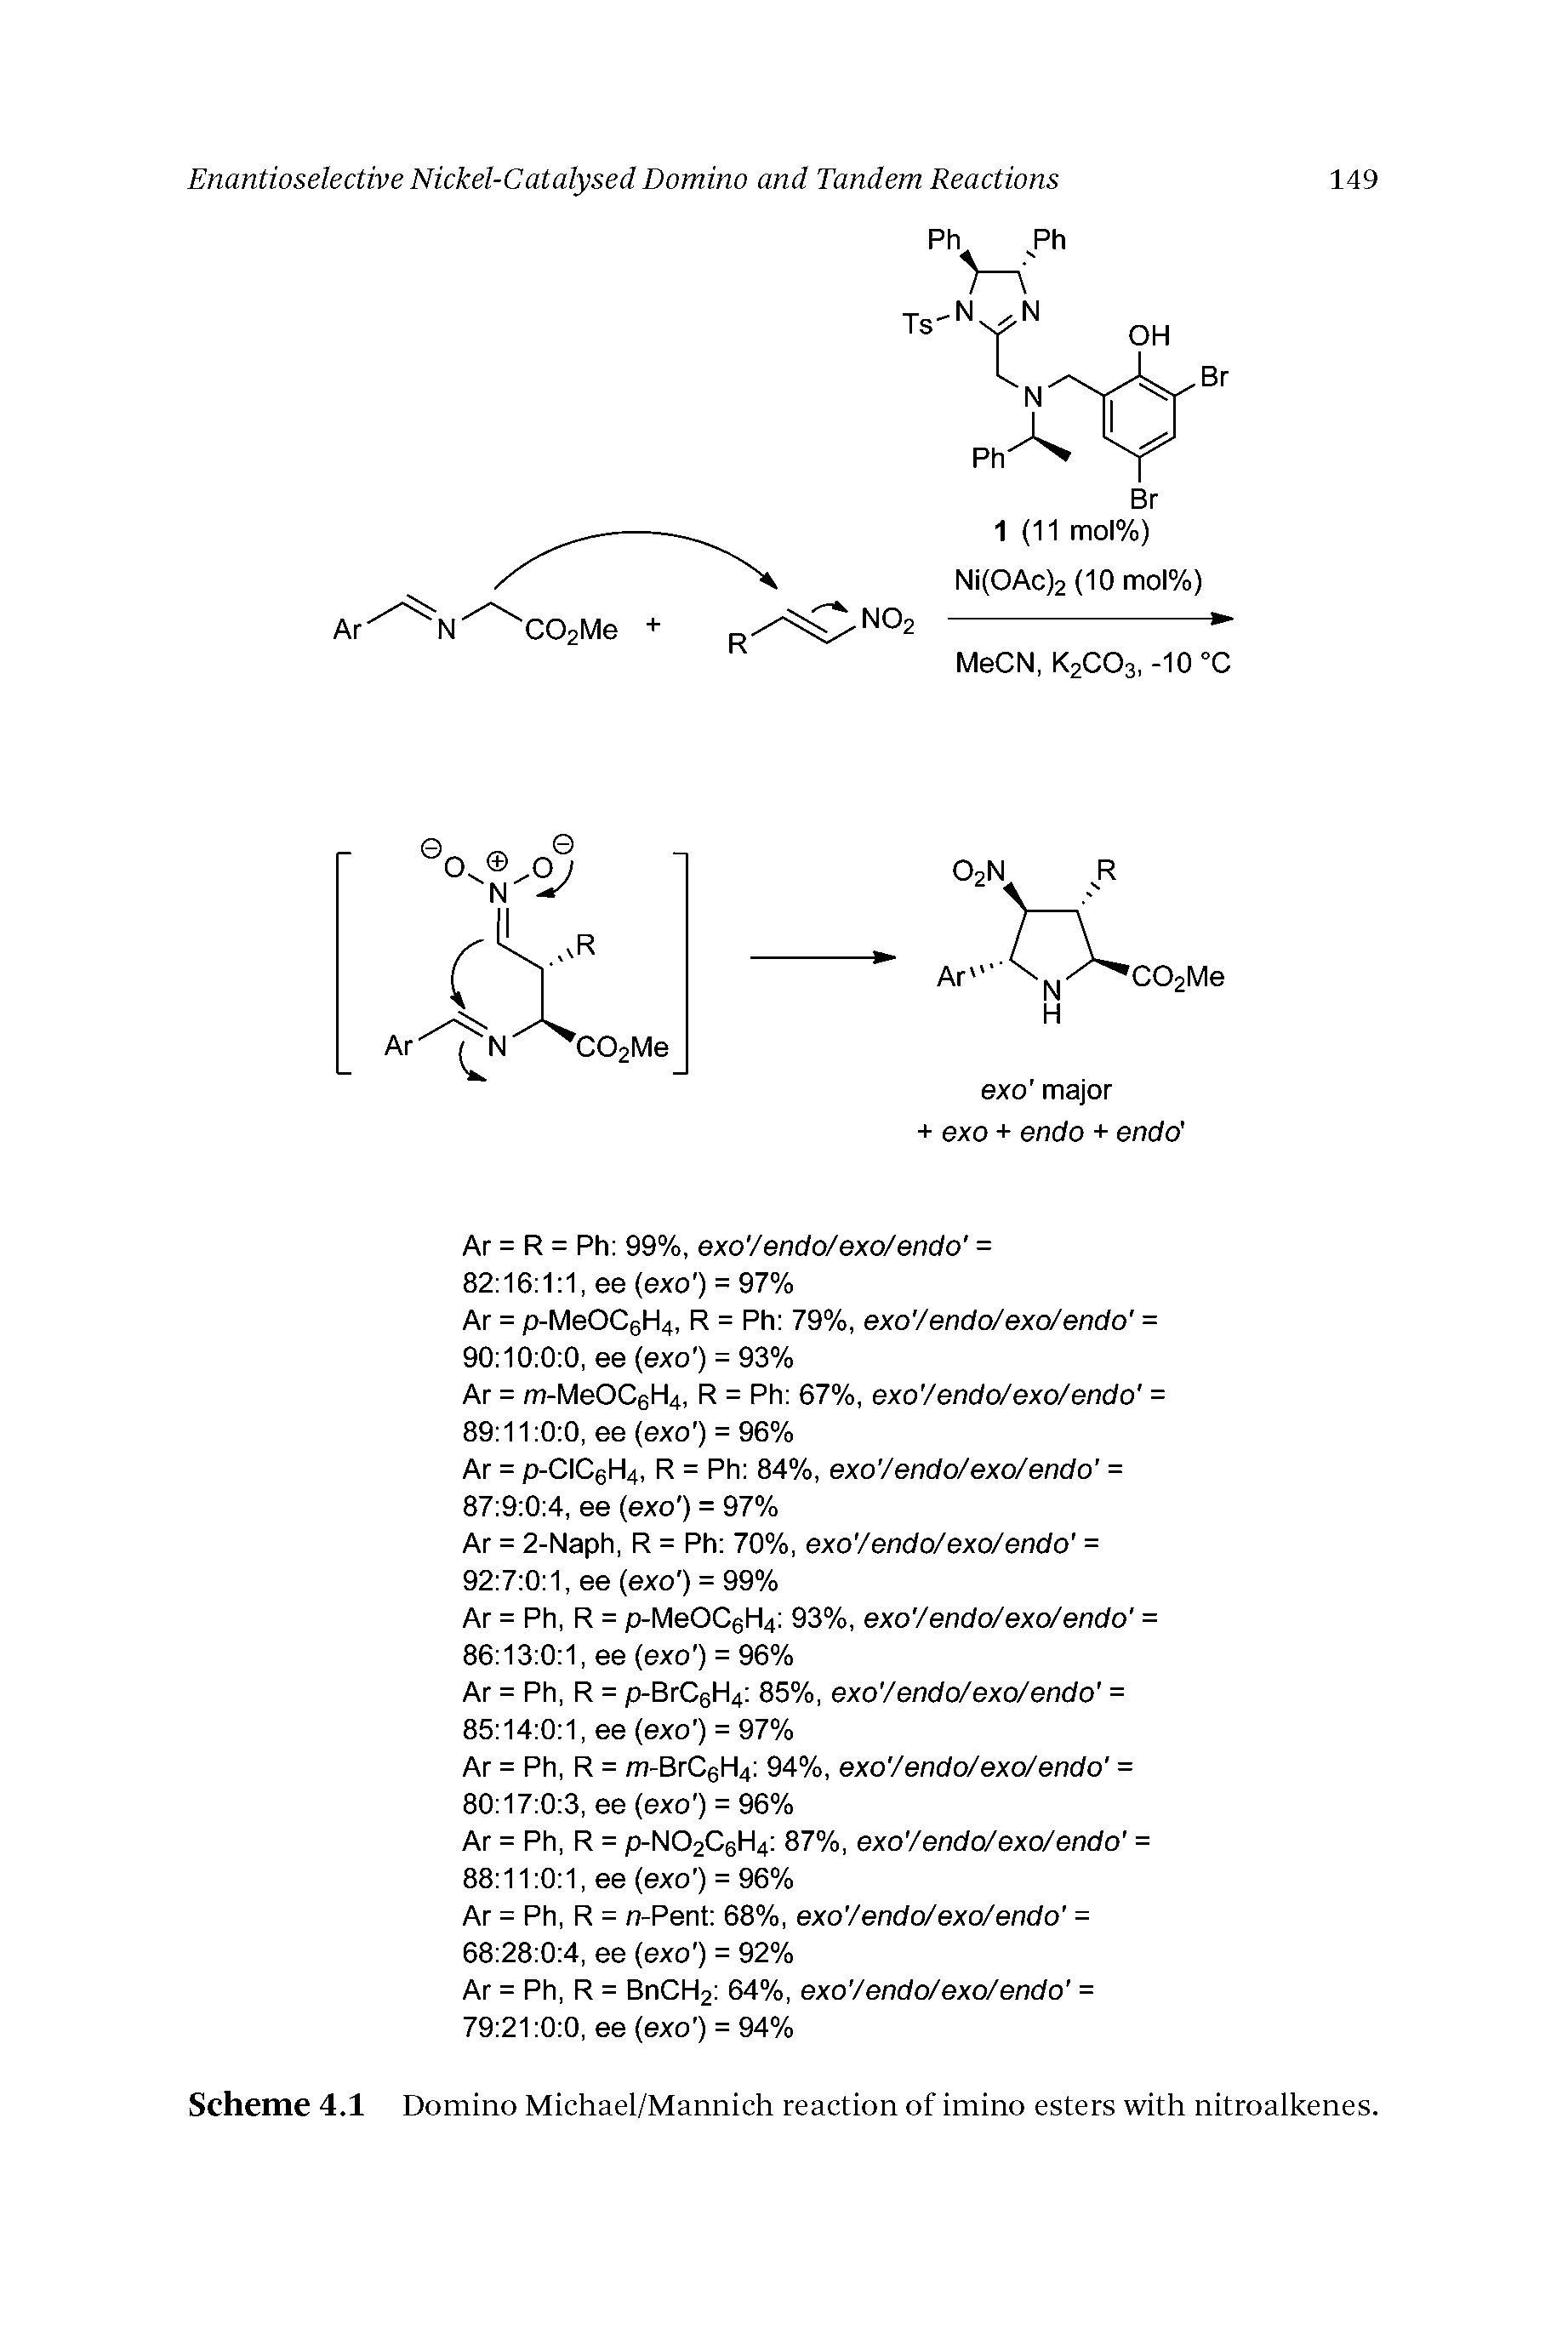 Scheme 4.1 Domino Michael/Mannich reaction of imino esters with nitroalkenes.